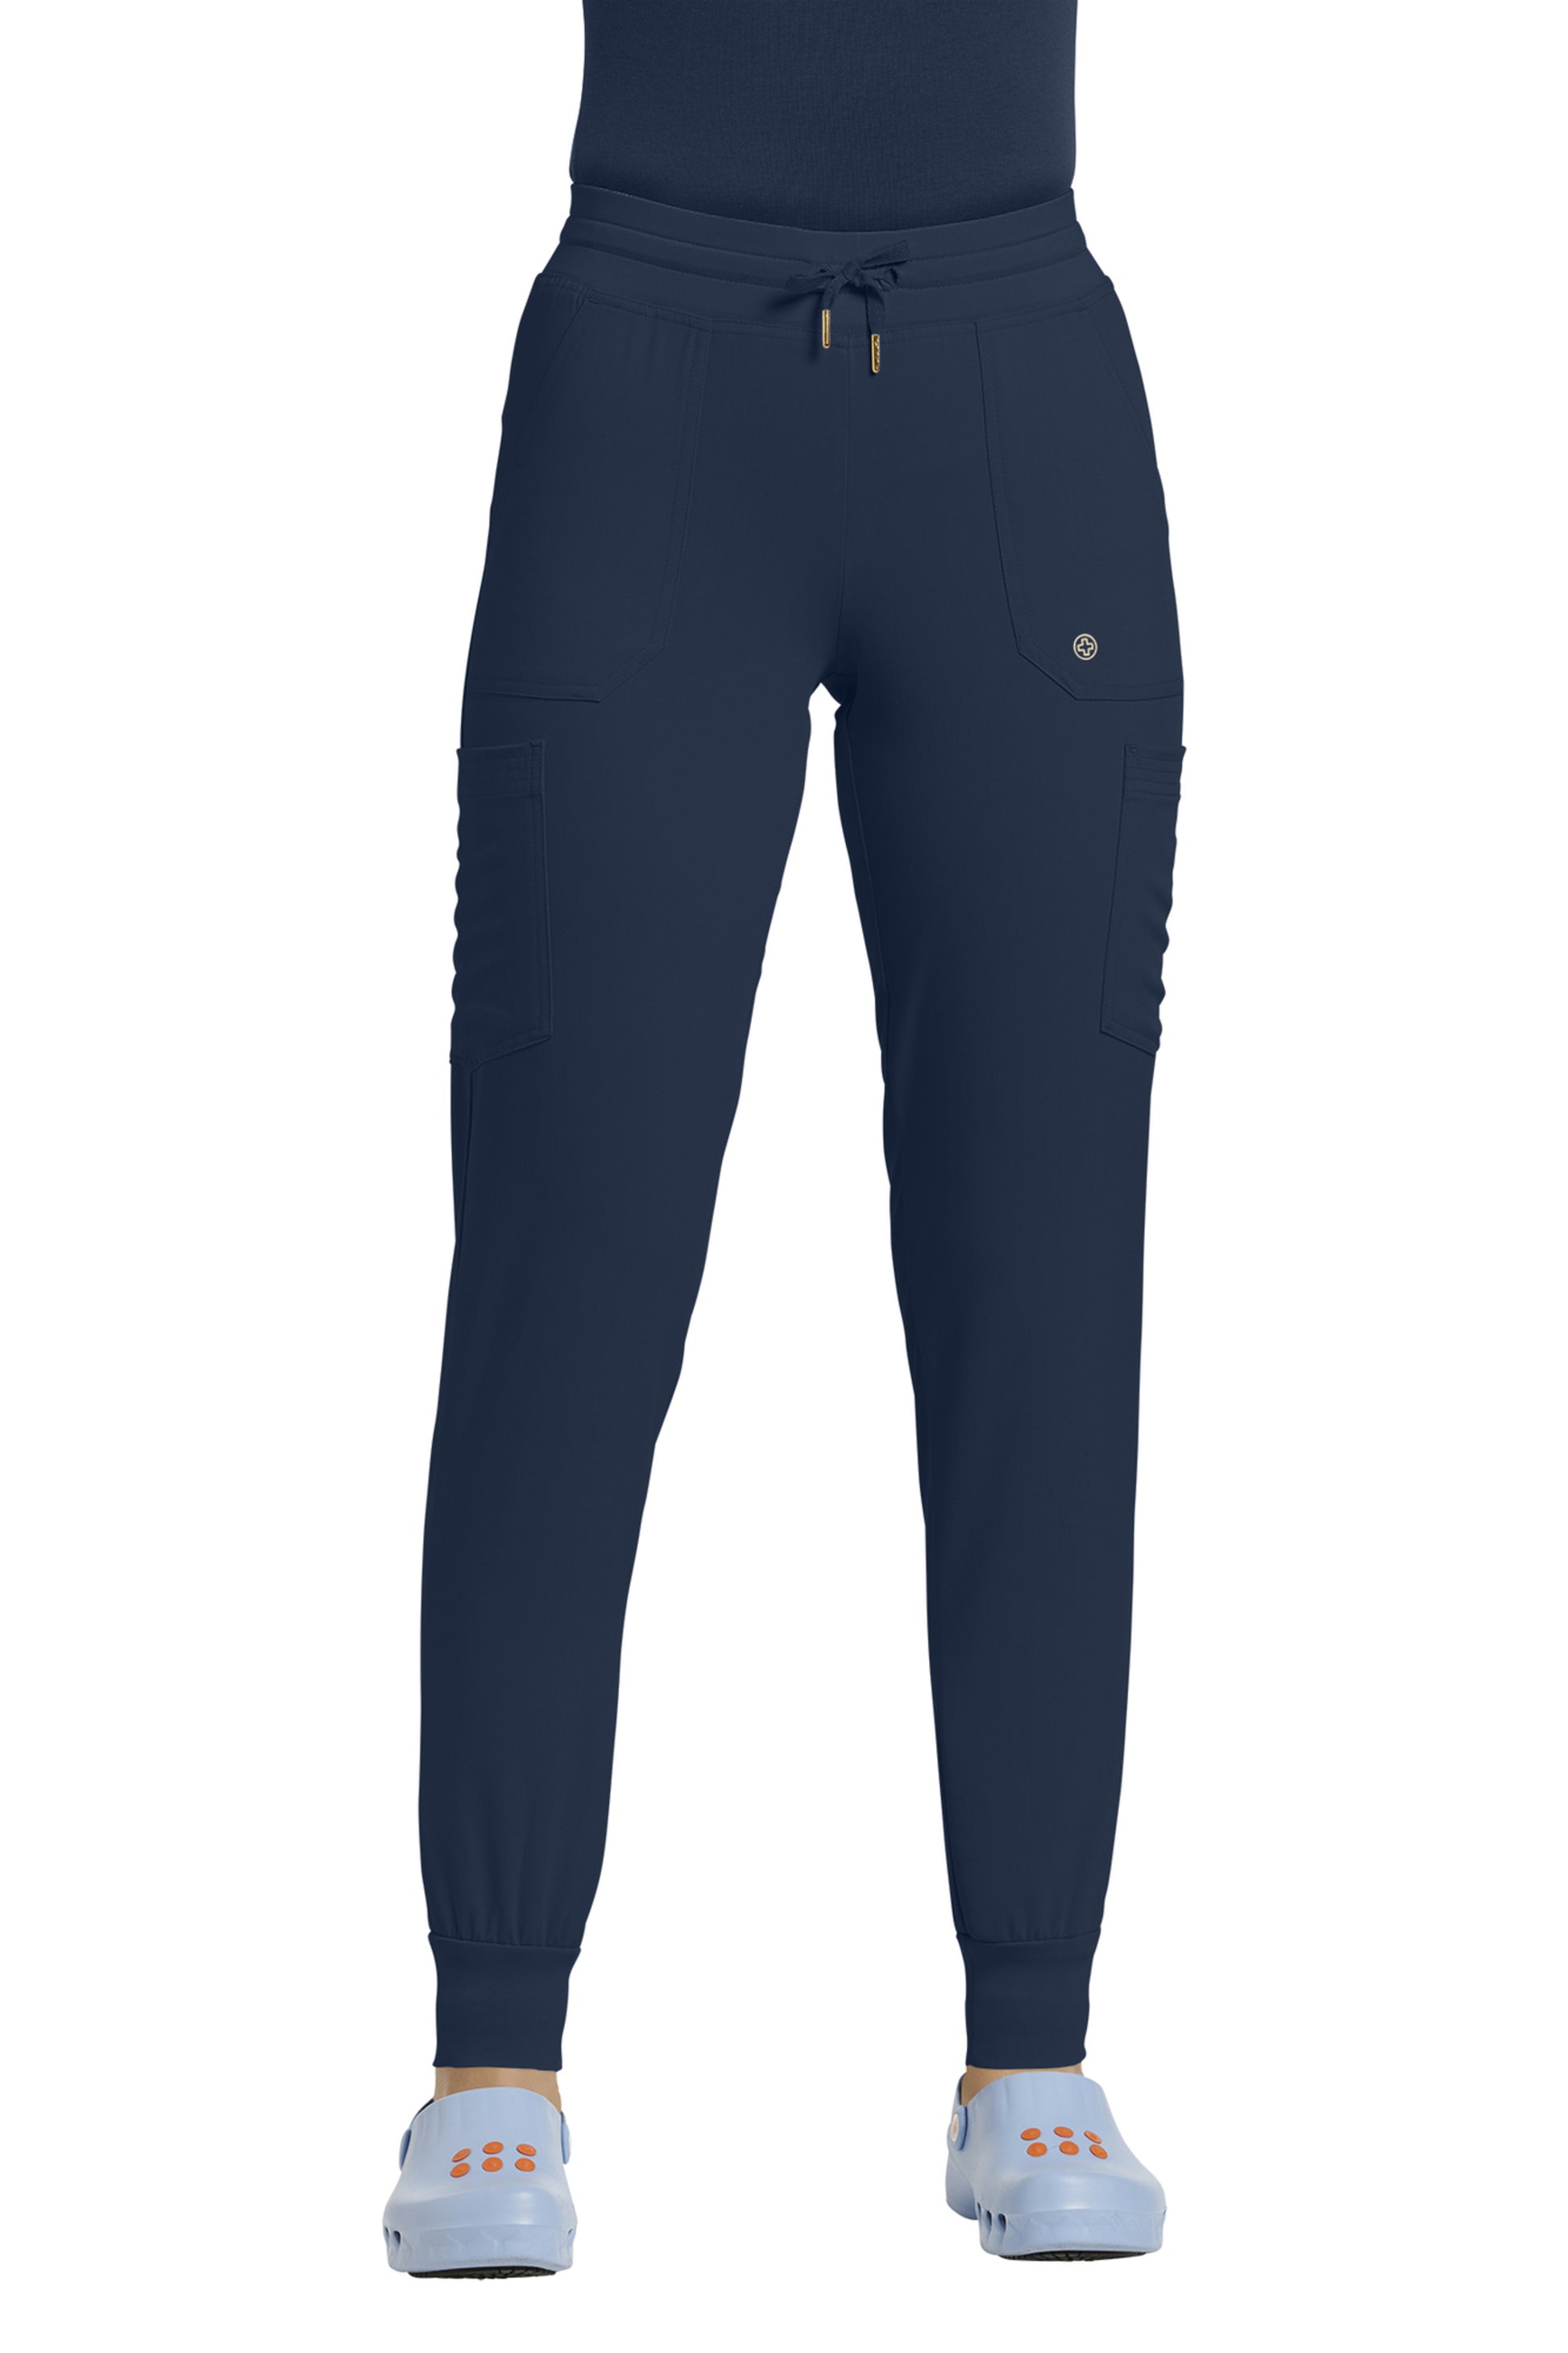 399P White Cross Fit Women's Petite Jogger Pants – Scrubs4U